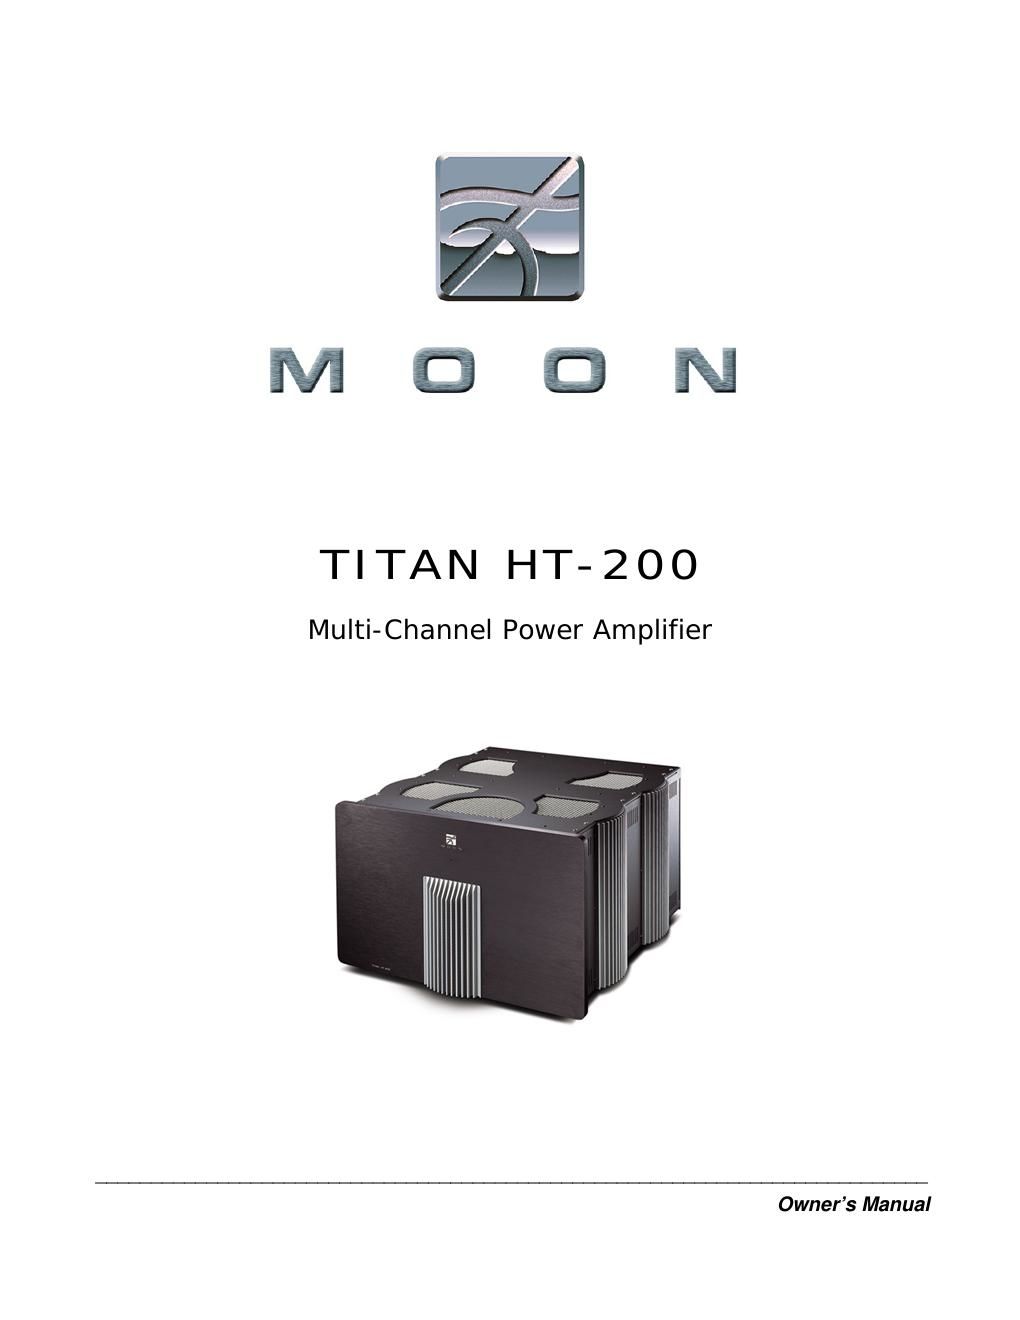 moon titan owners manual